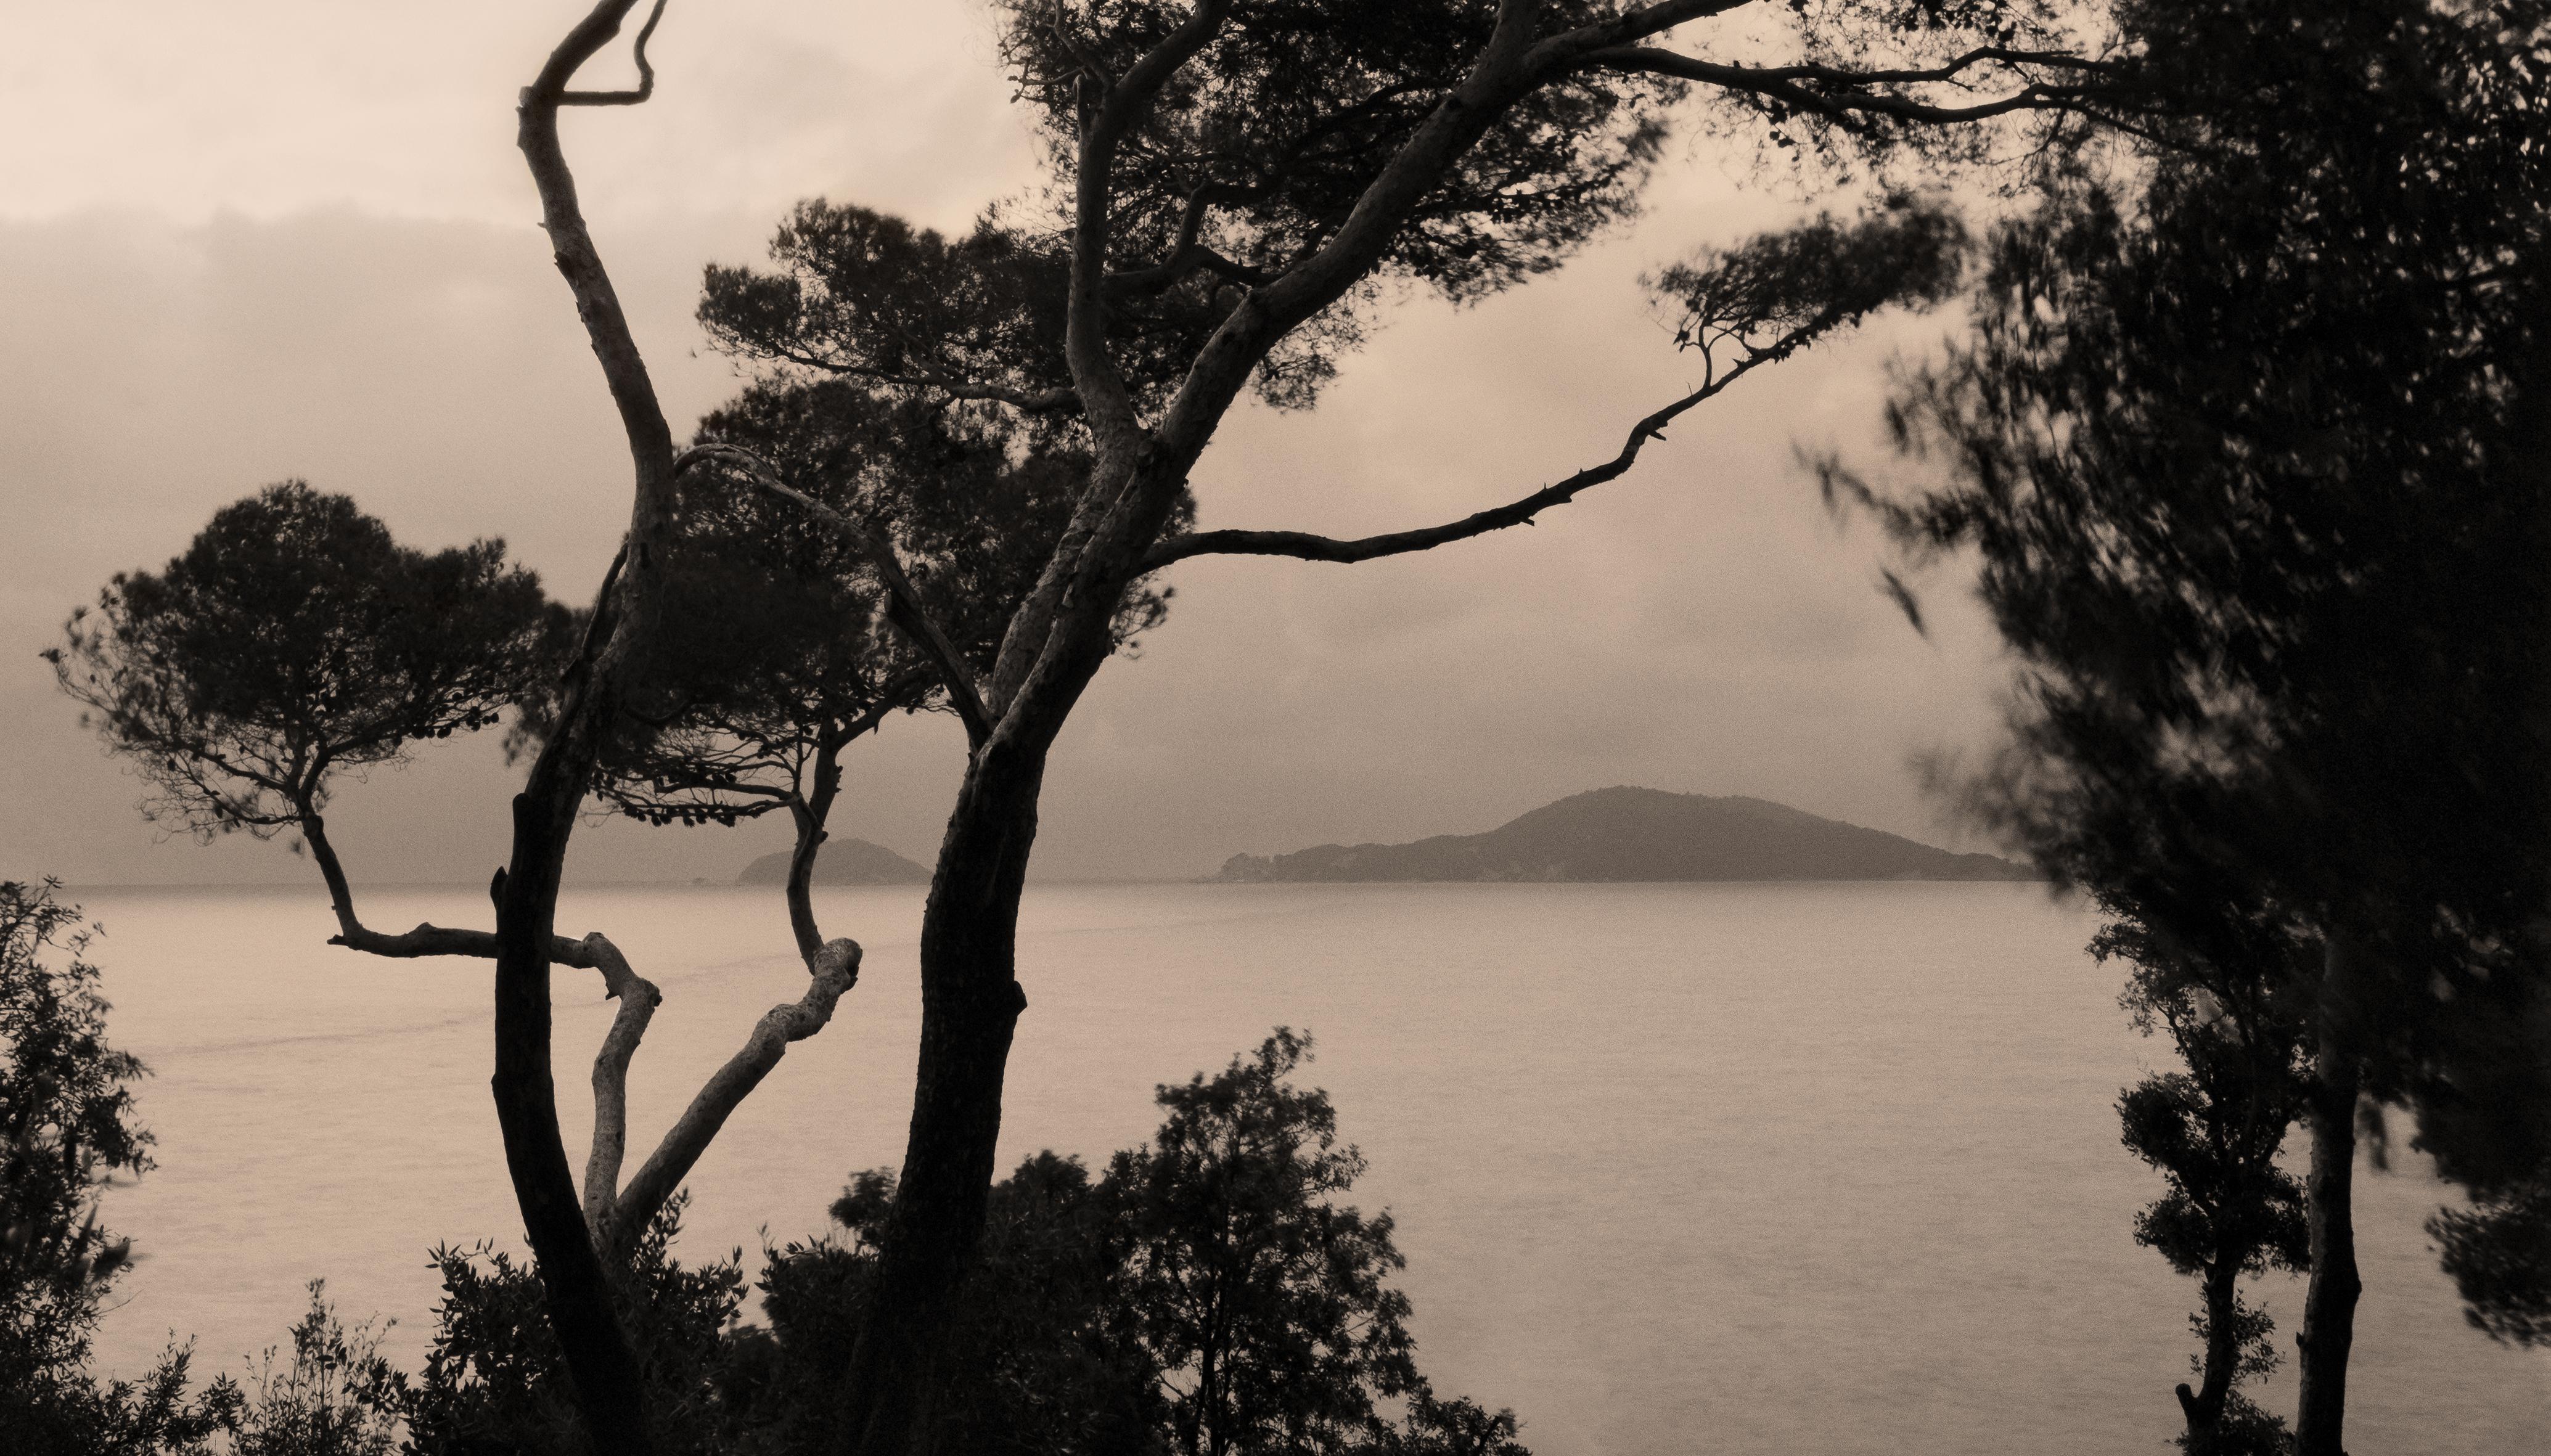 Ugne Pouwell Landscape Photograph - Currents - Italian Riviera landscape photography 175 x 100cm, Limited Edition 5